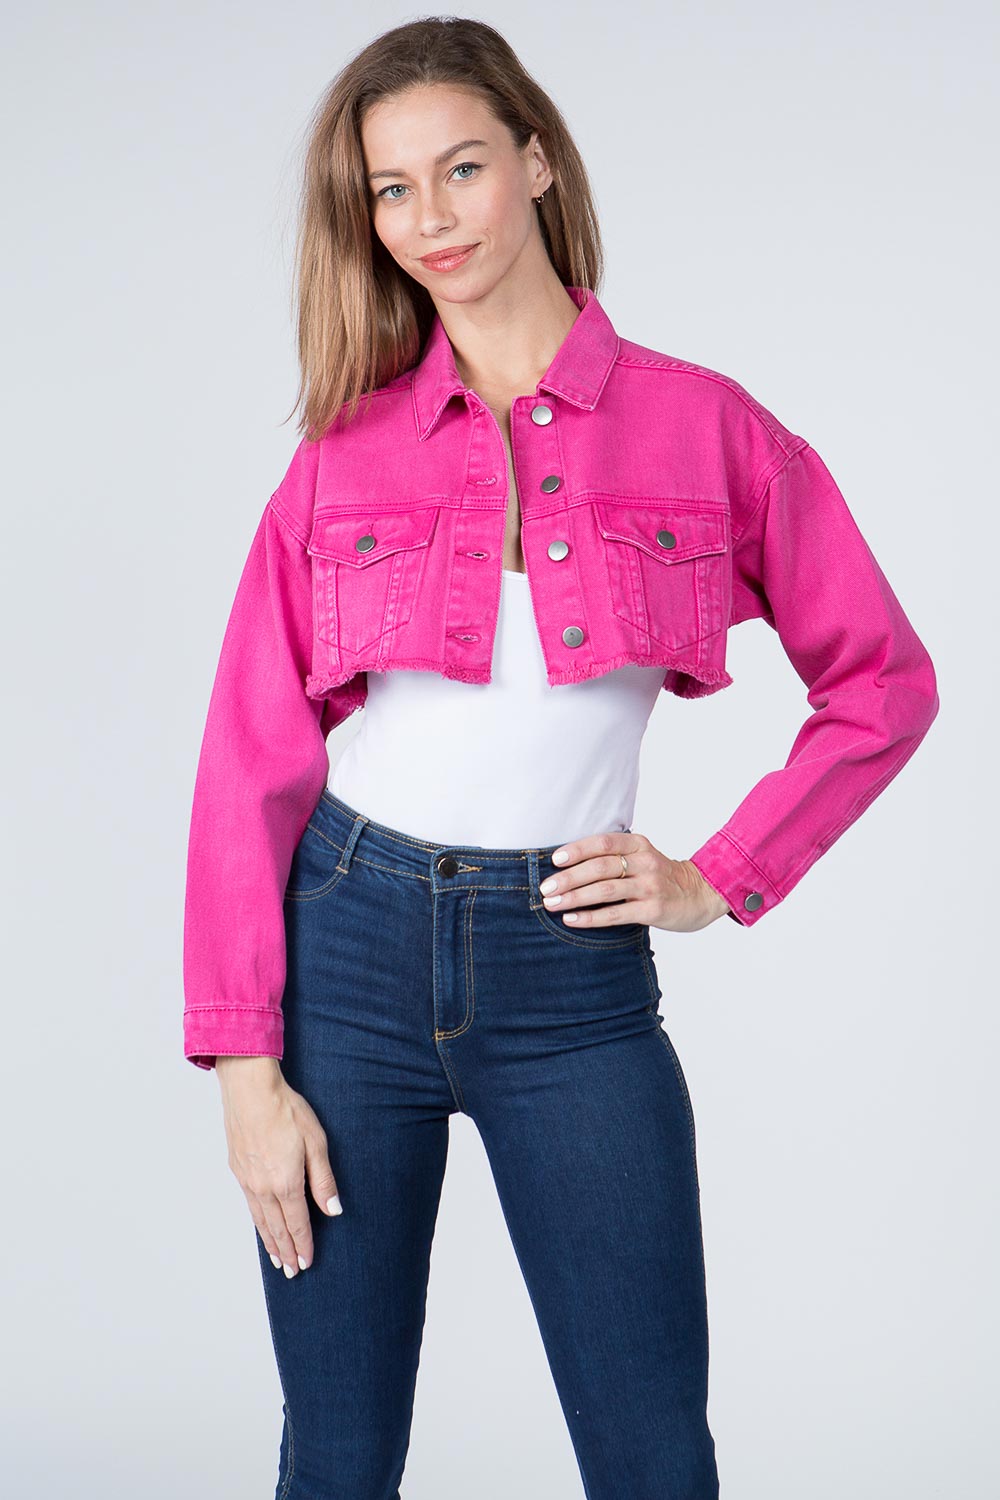 hot pink jean jacket